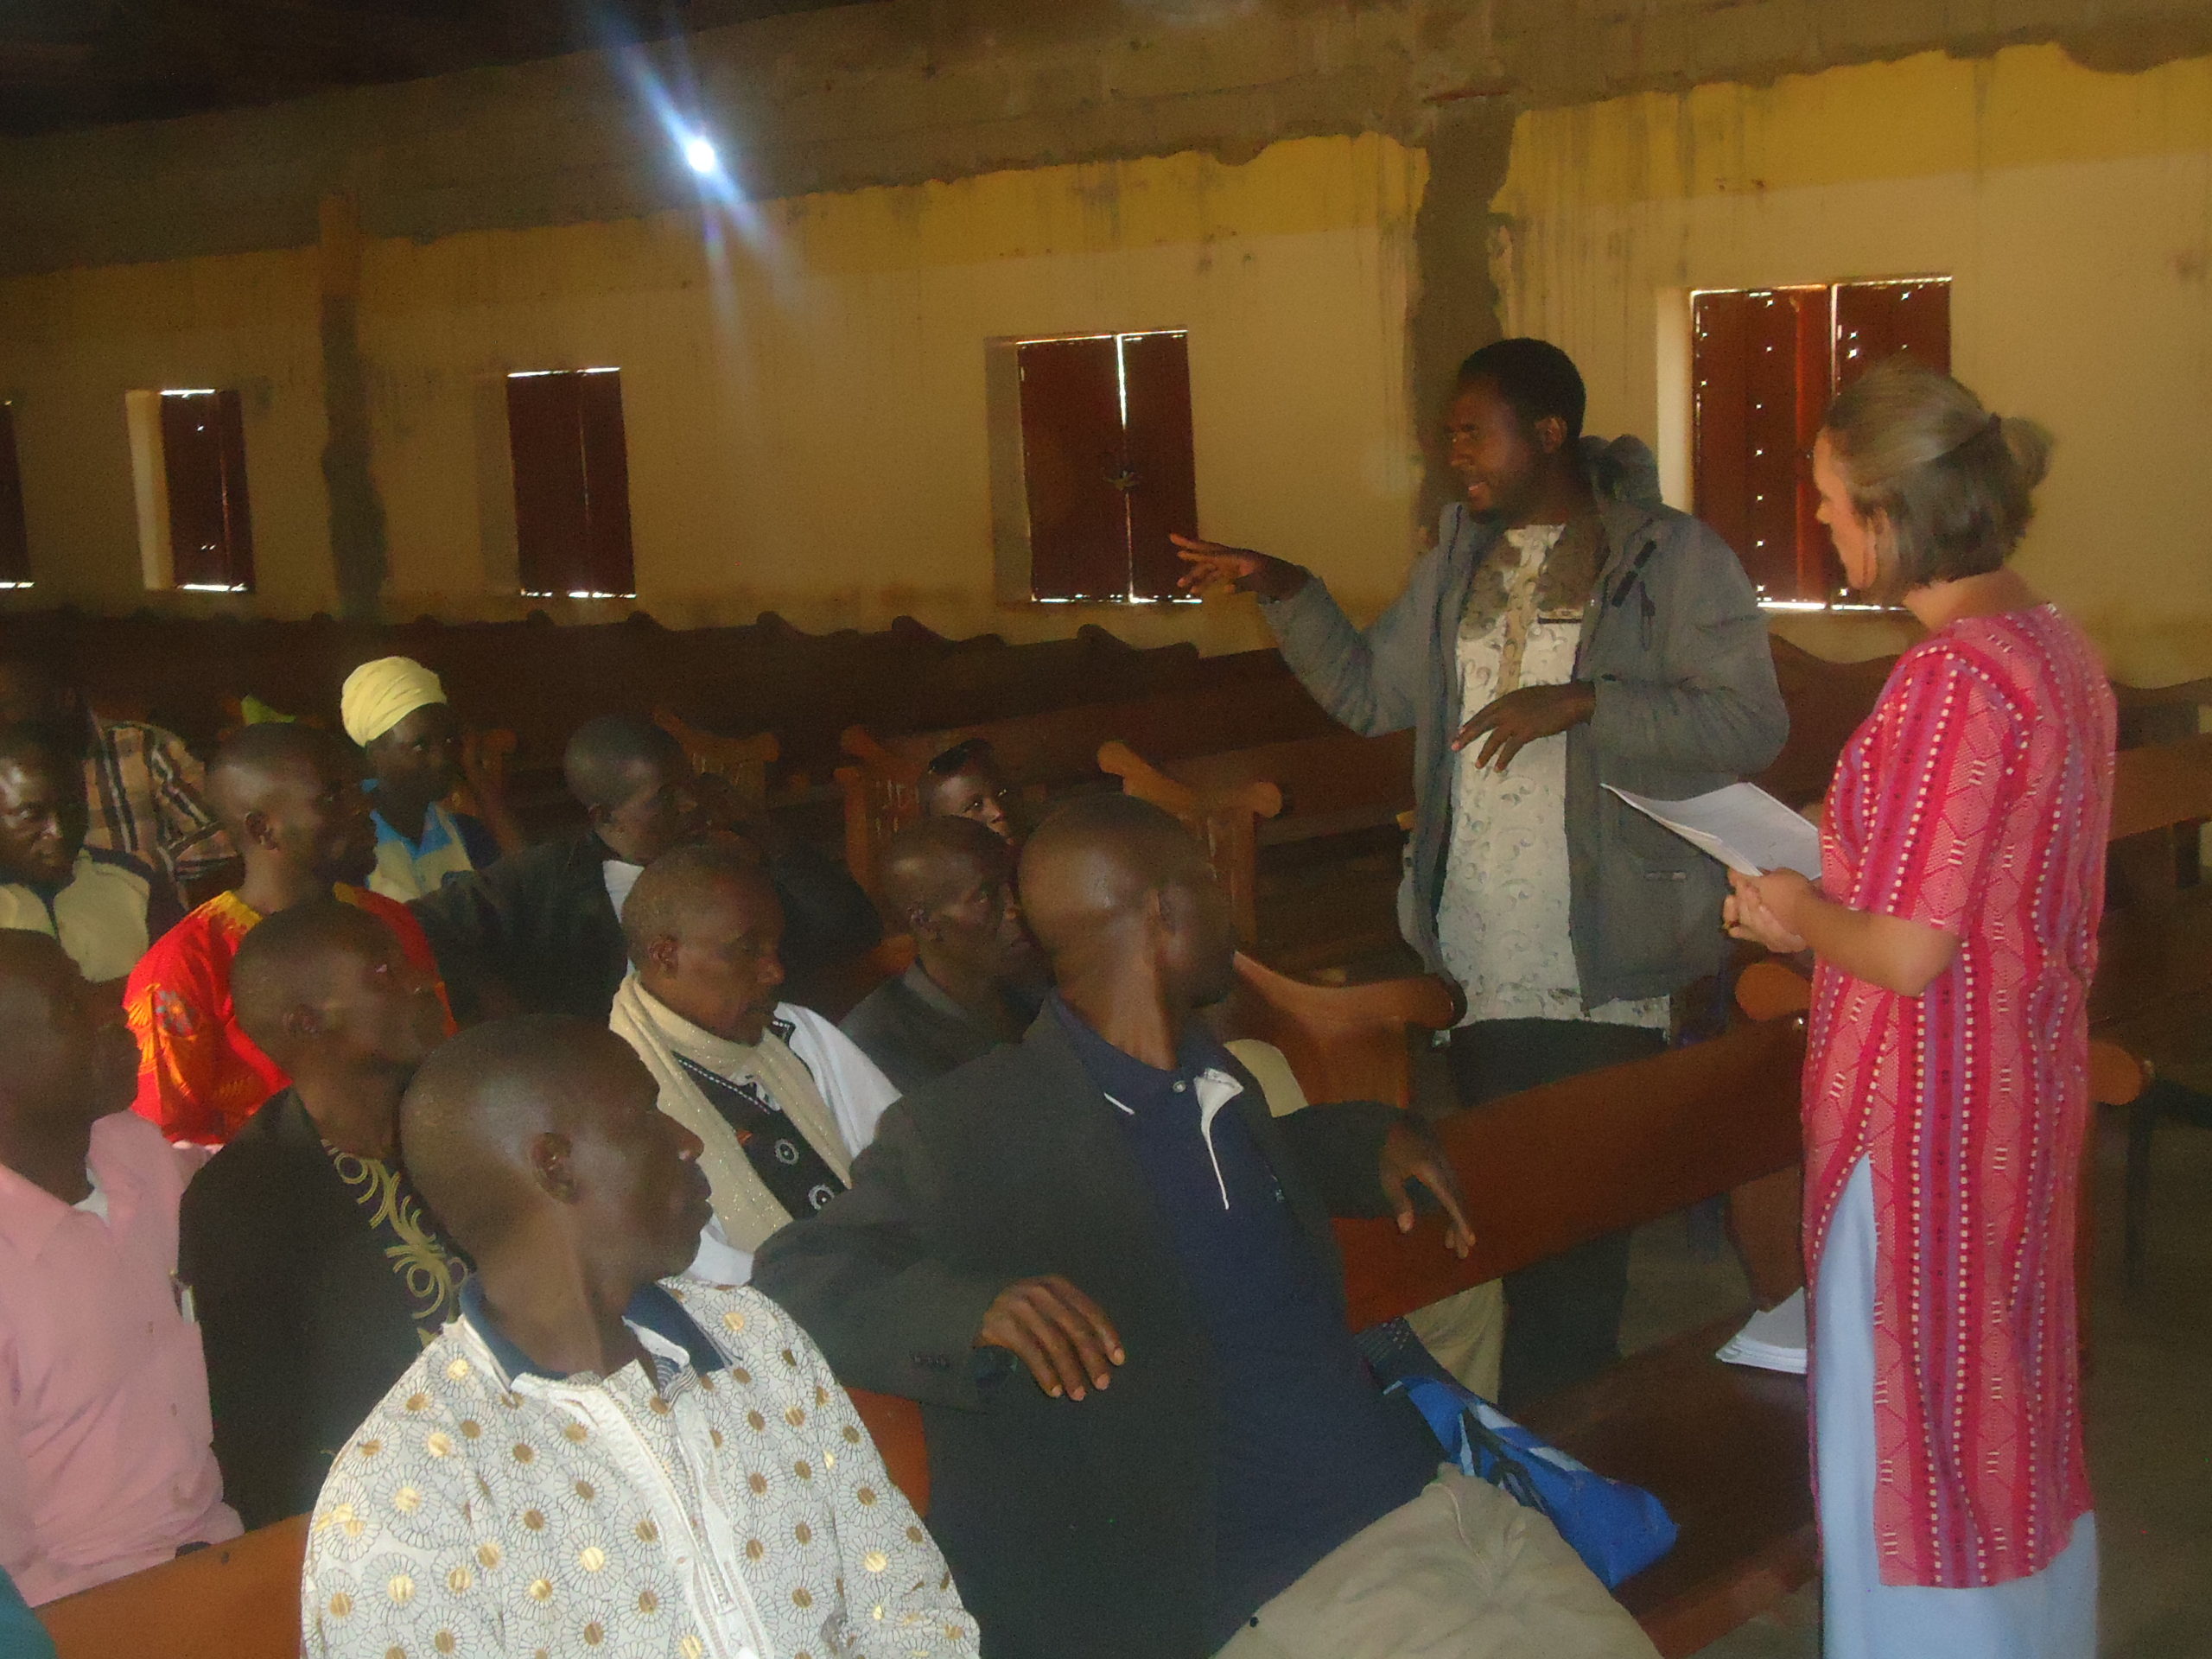 Interpreters translate the teaching into Tugbiri